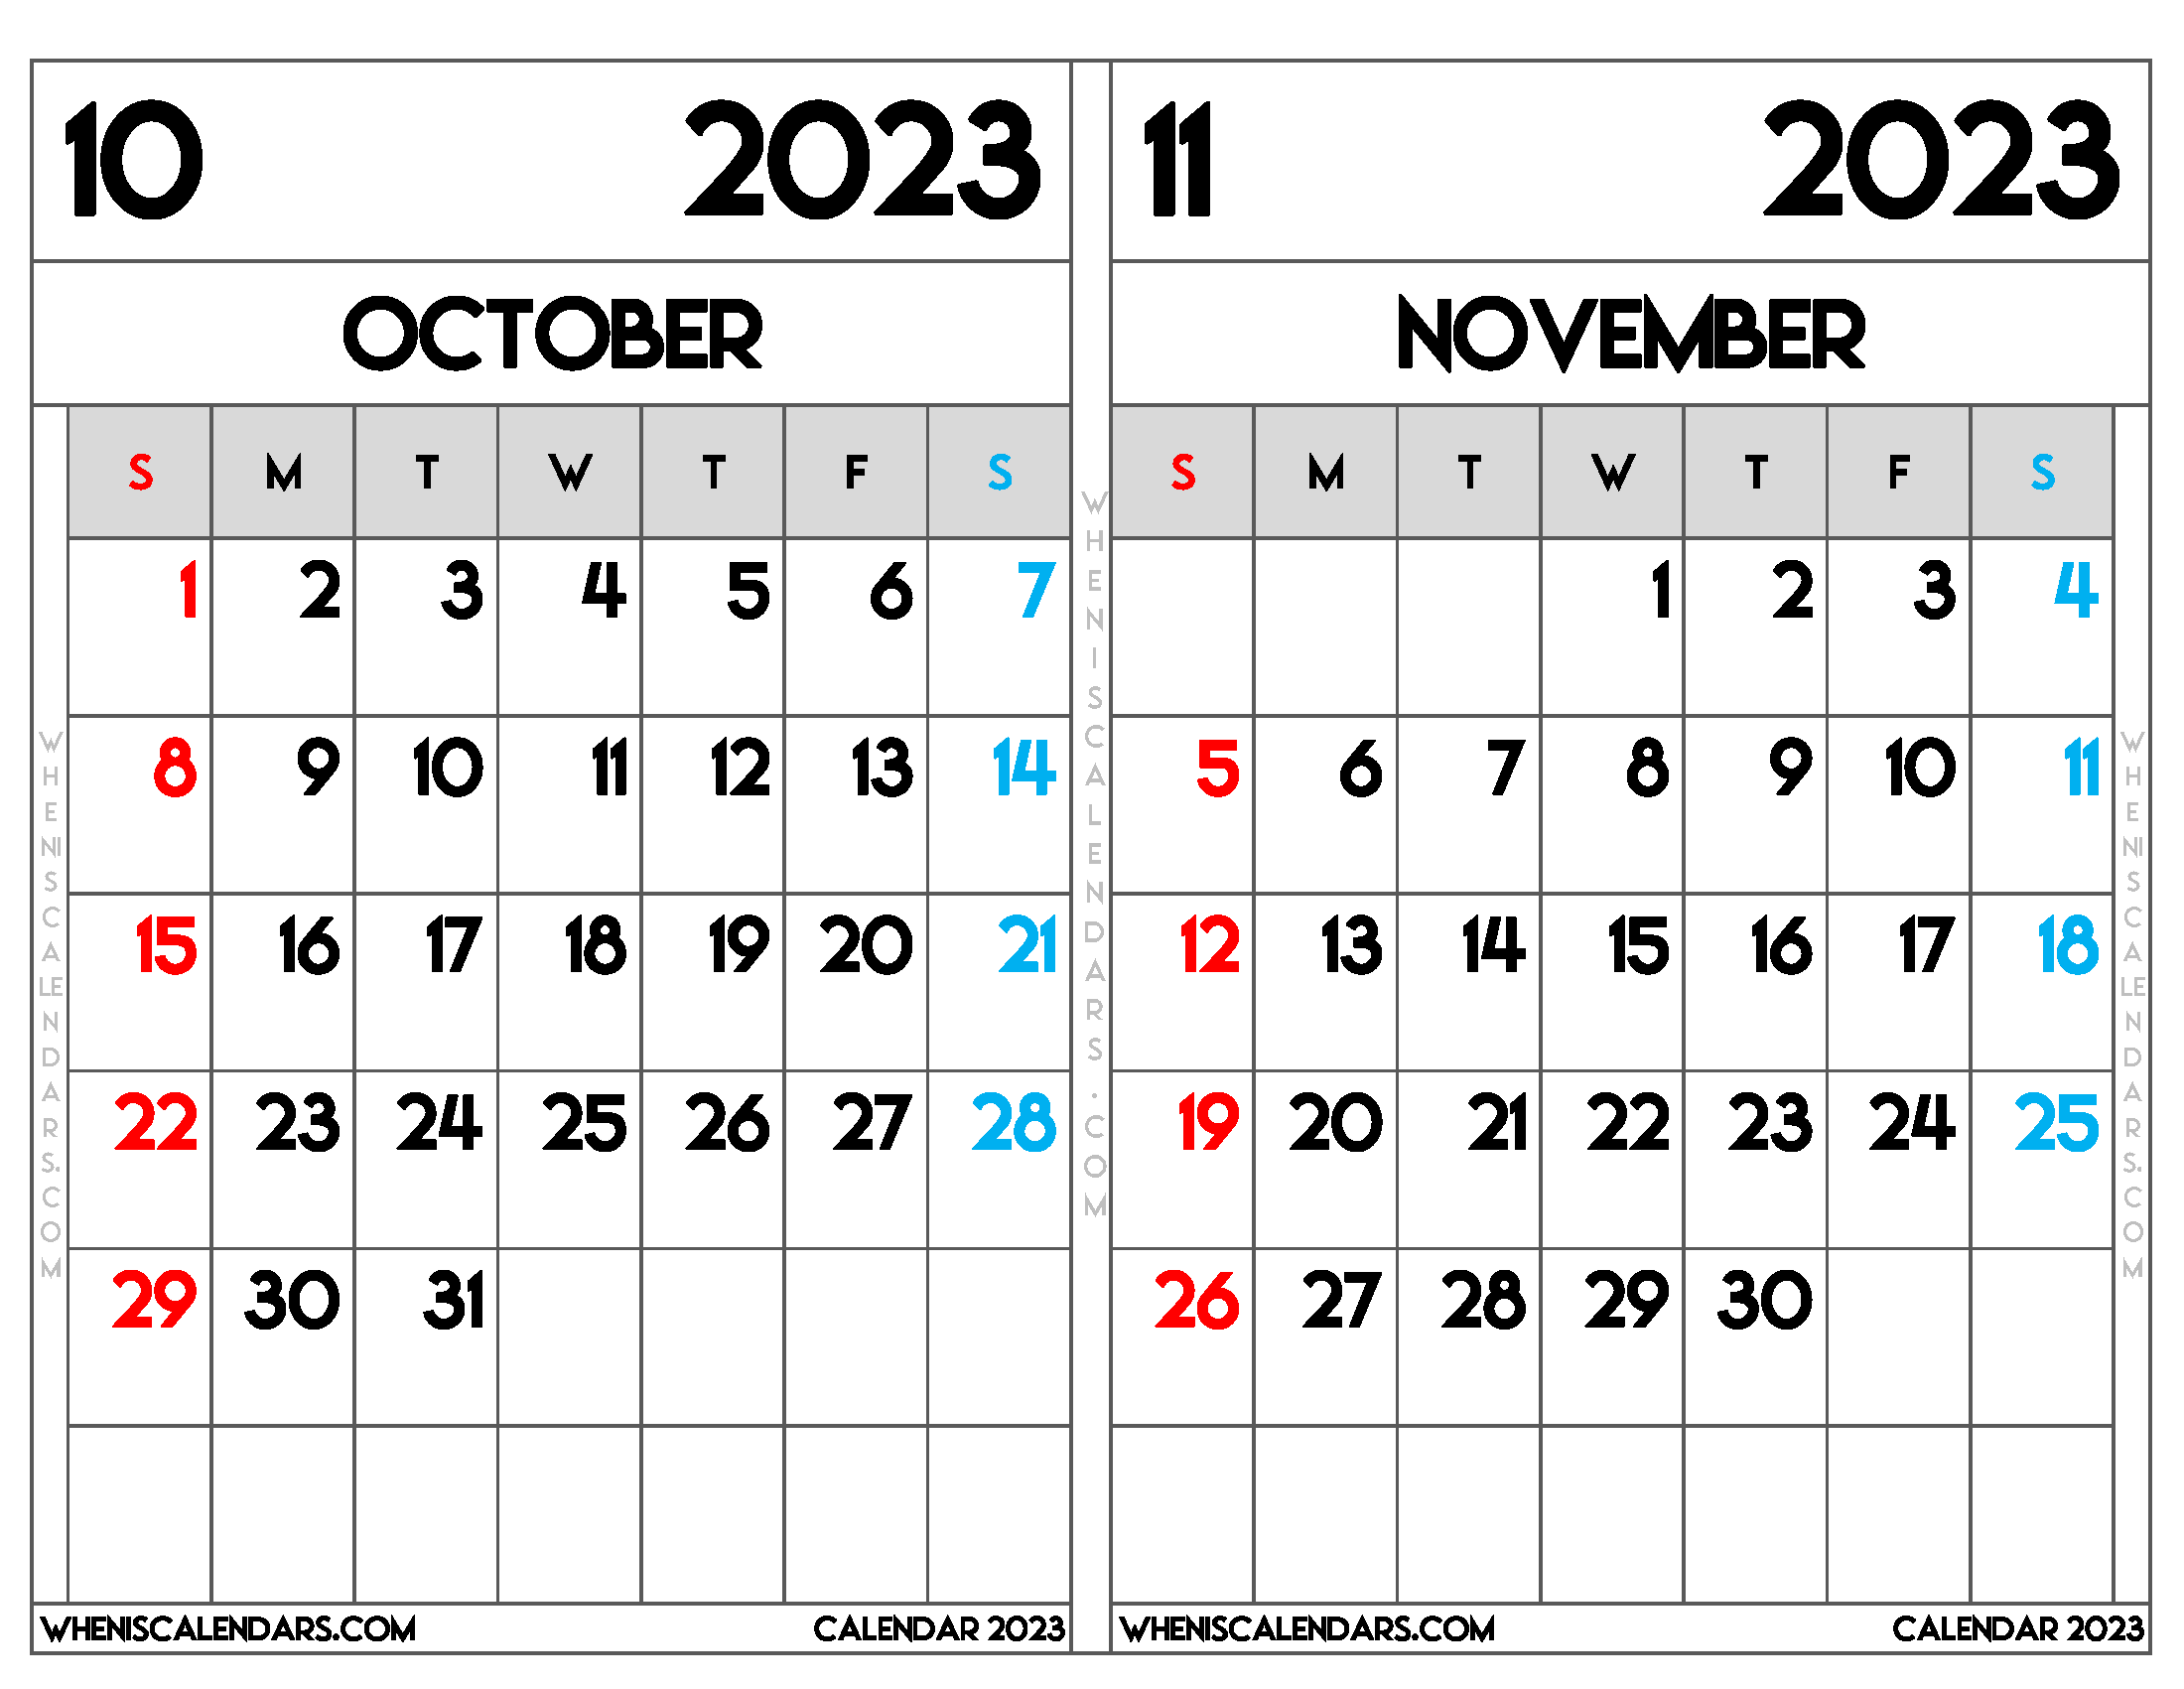 Download Printable October and November 2023 Calendar as PDF and PNG Image